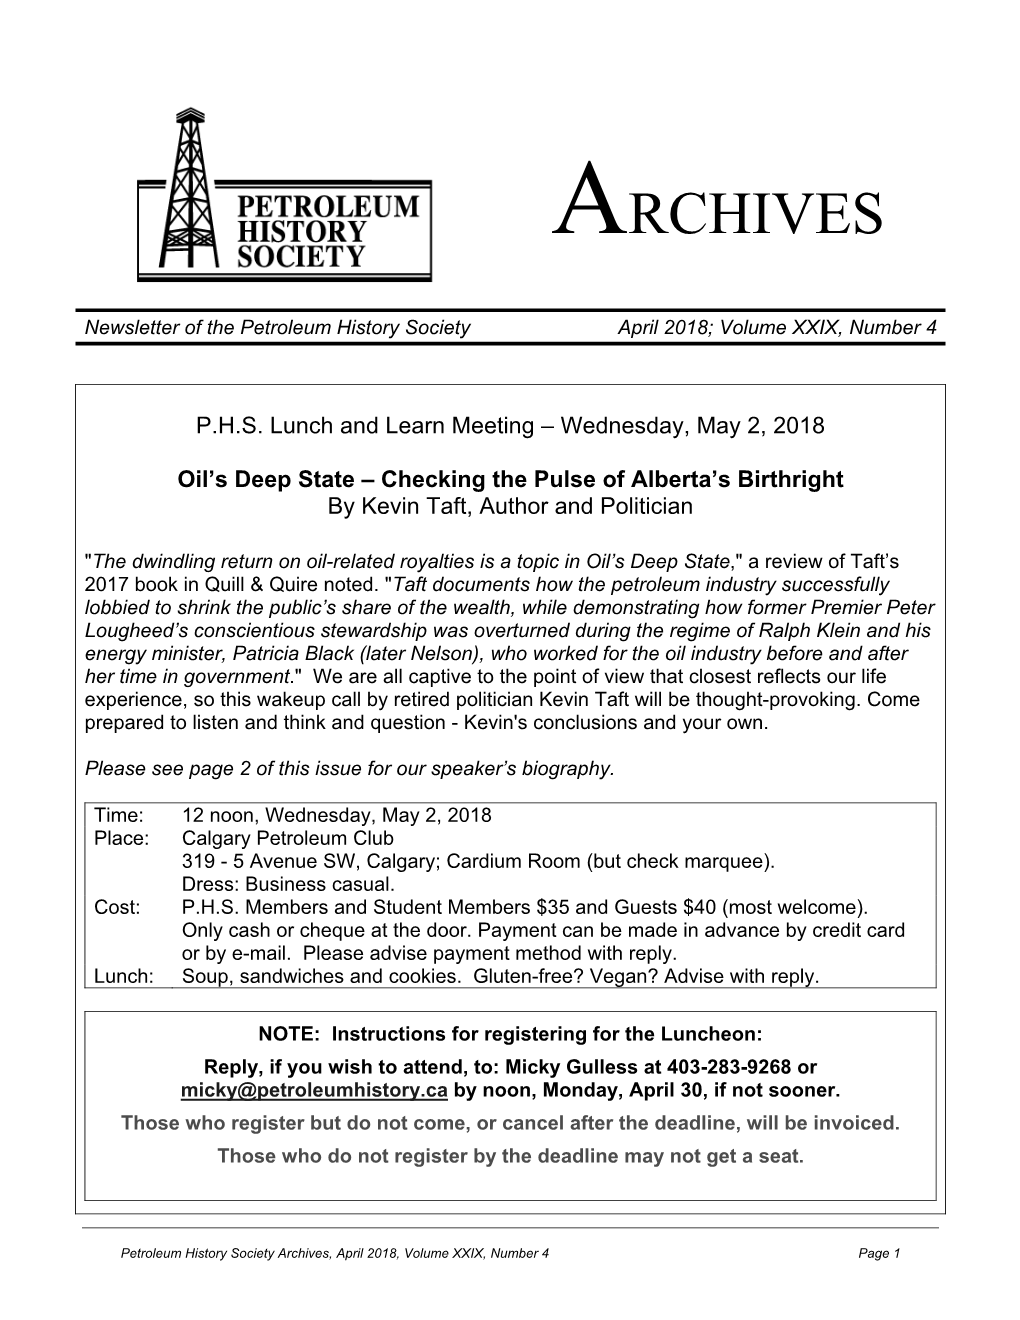 Archives Newsletter April 2018